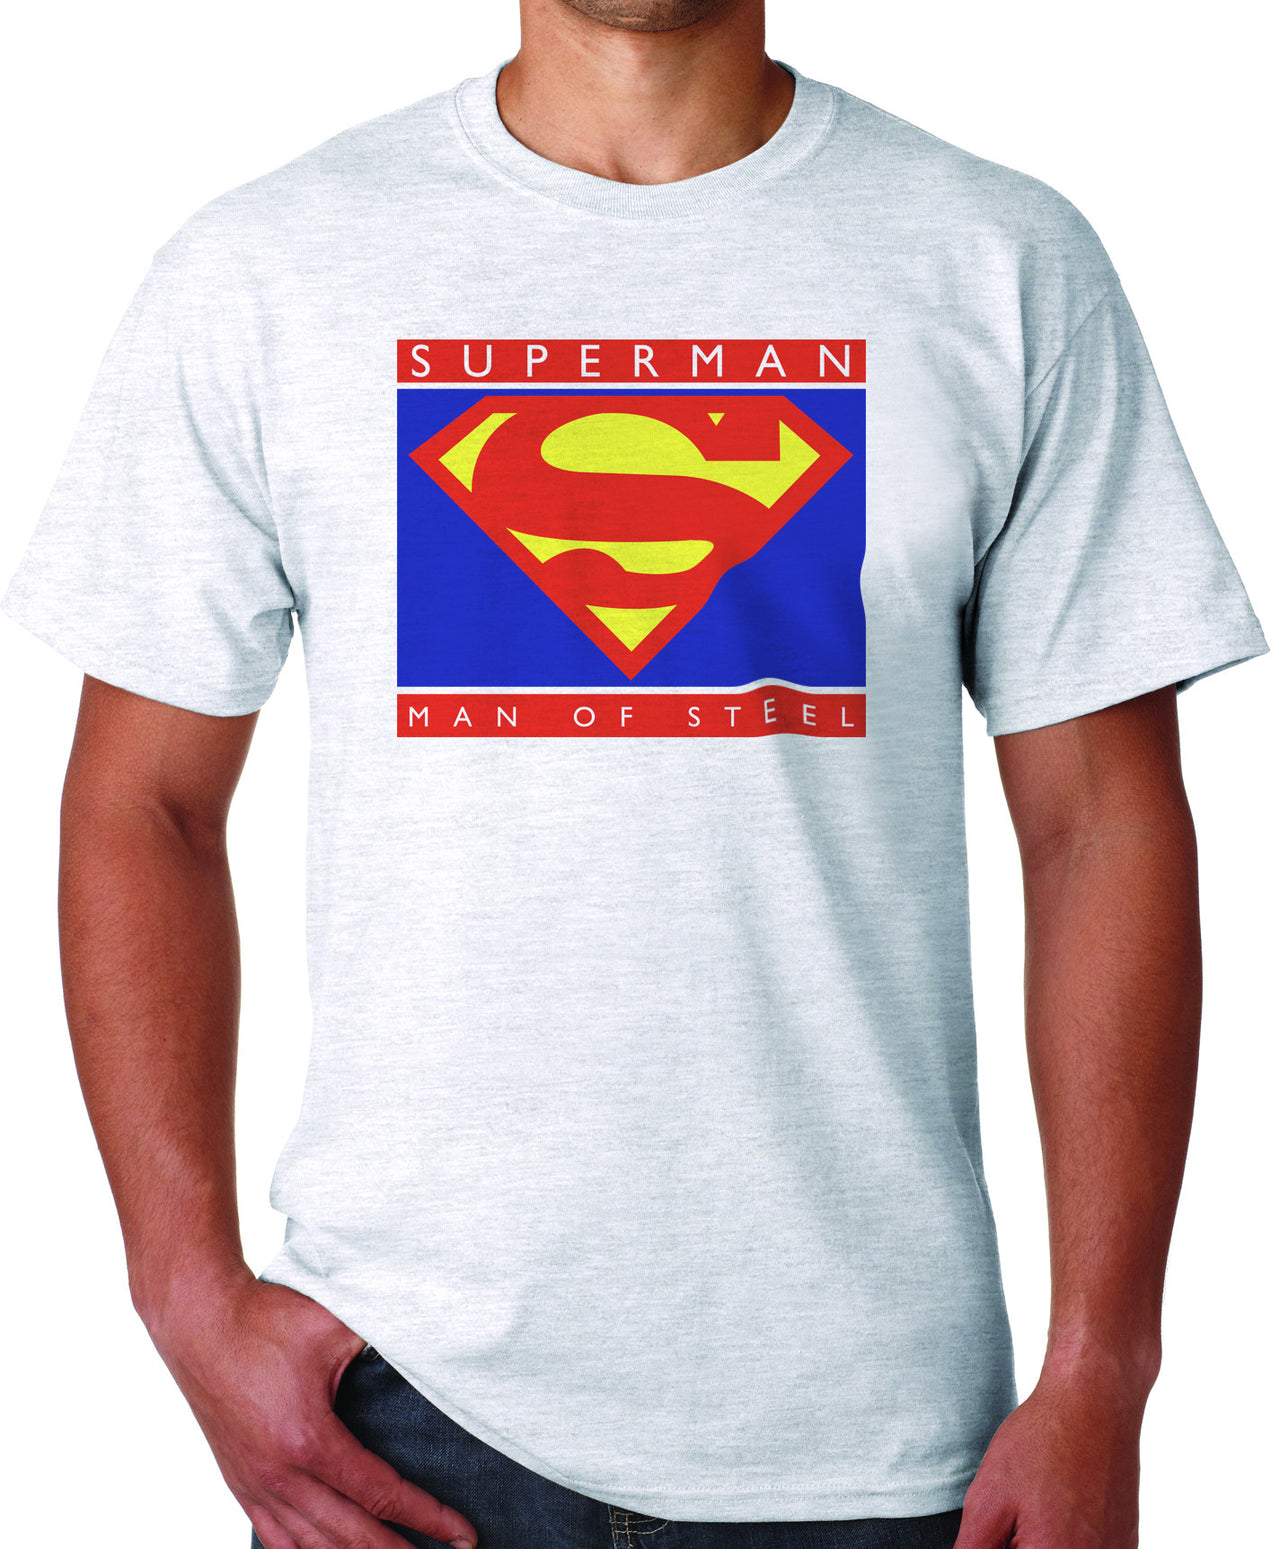 Superman Man Of Steel Standing Figure Logo on White Colored Tshirt for Men - TshirtNow.net - 1